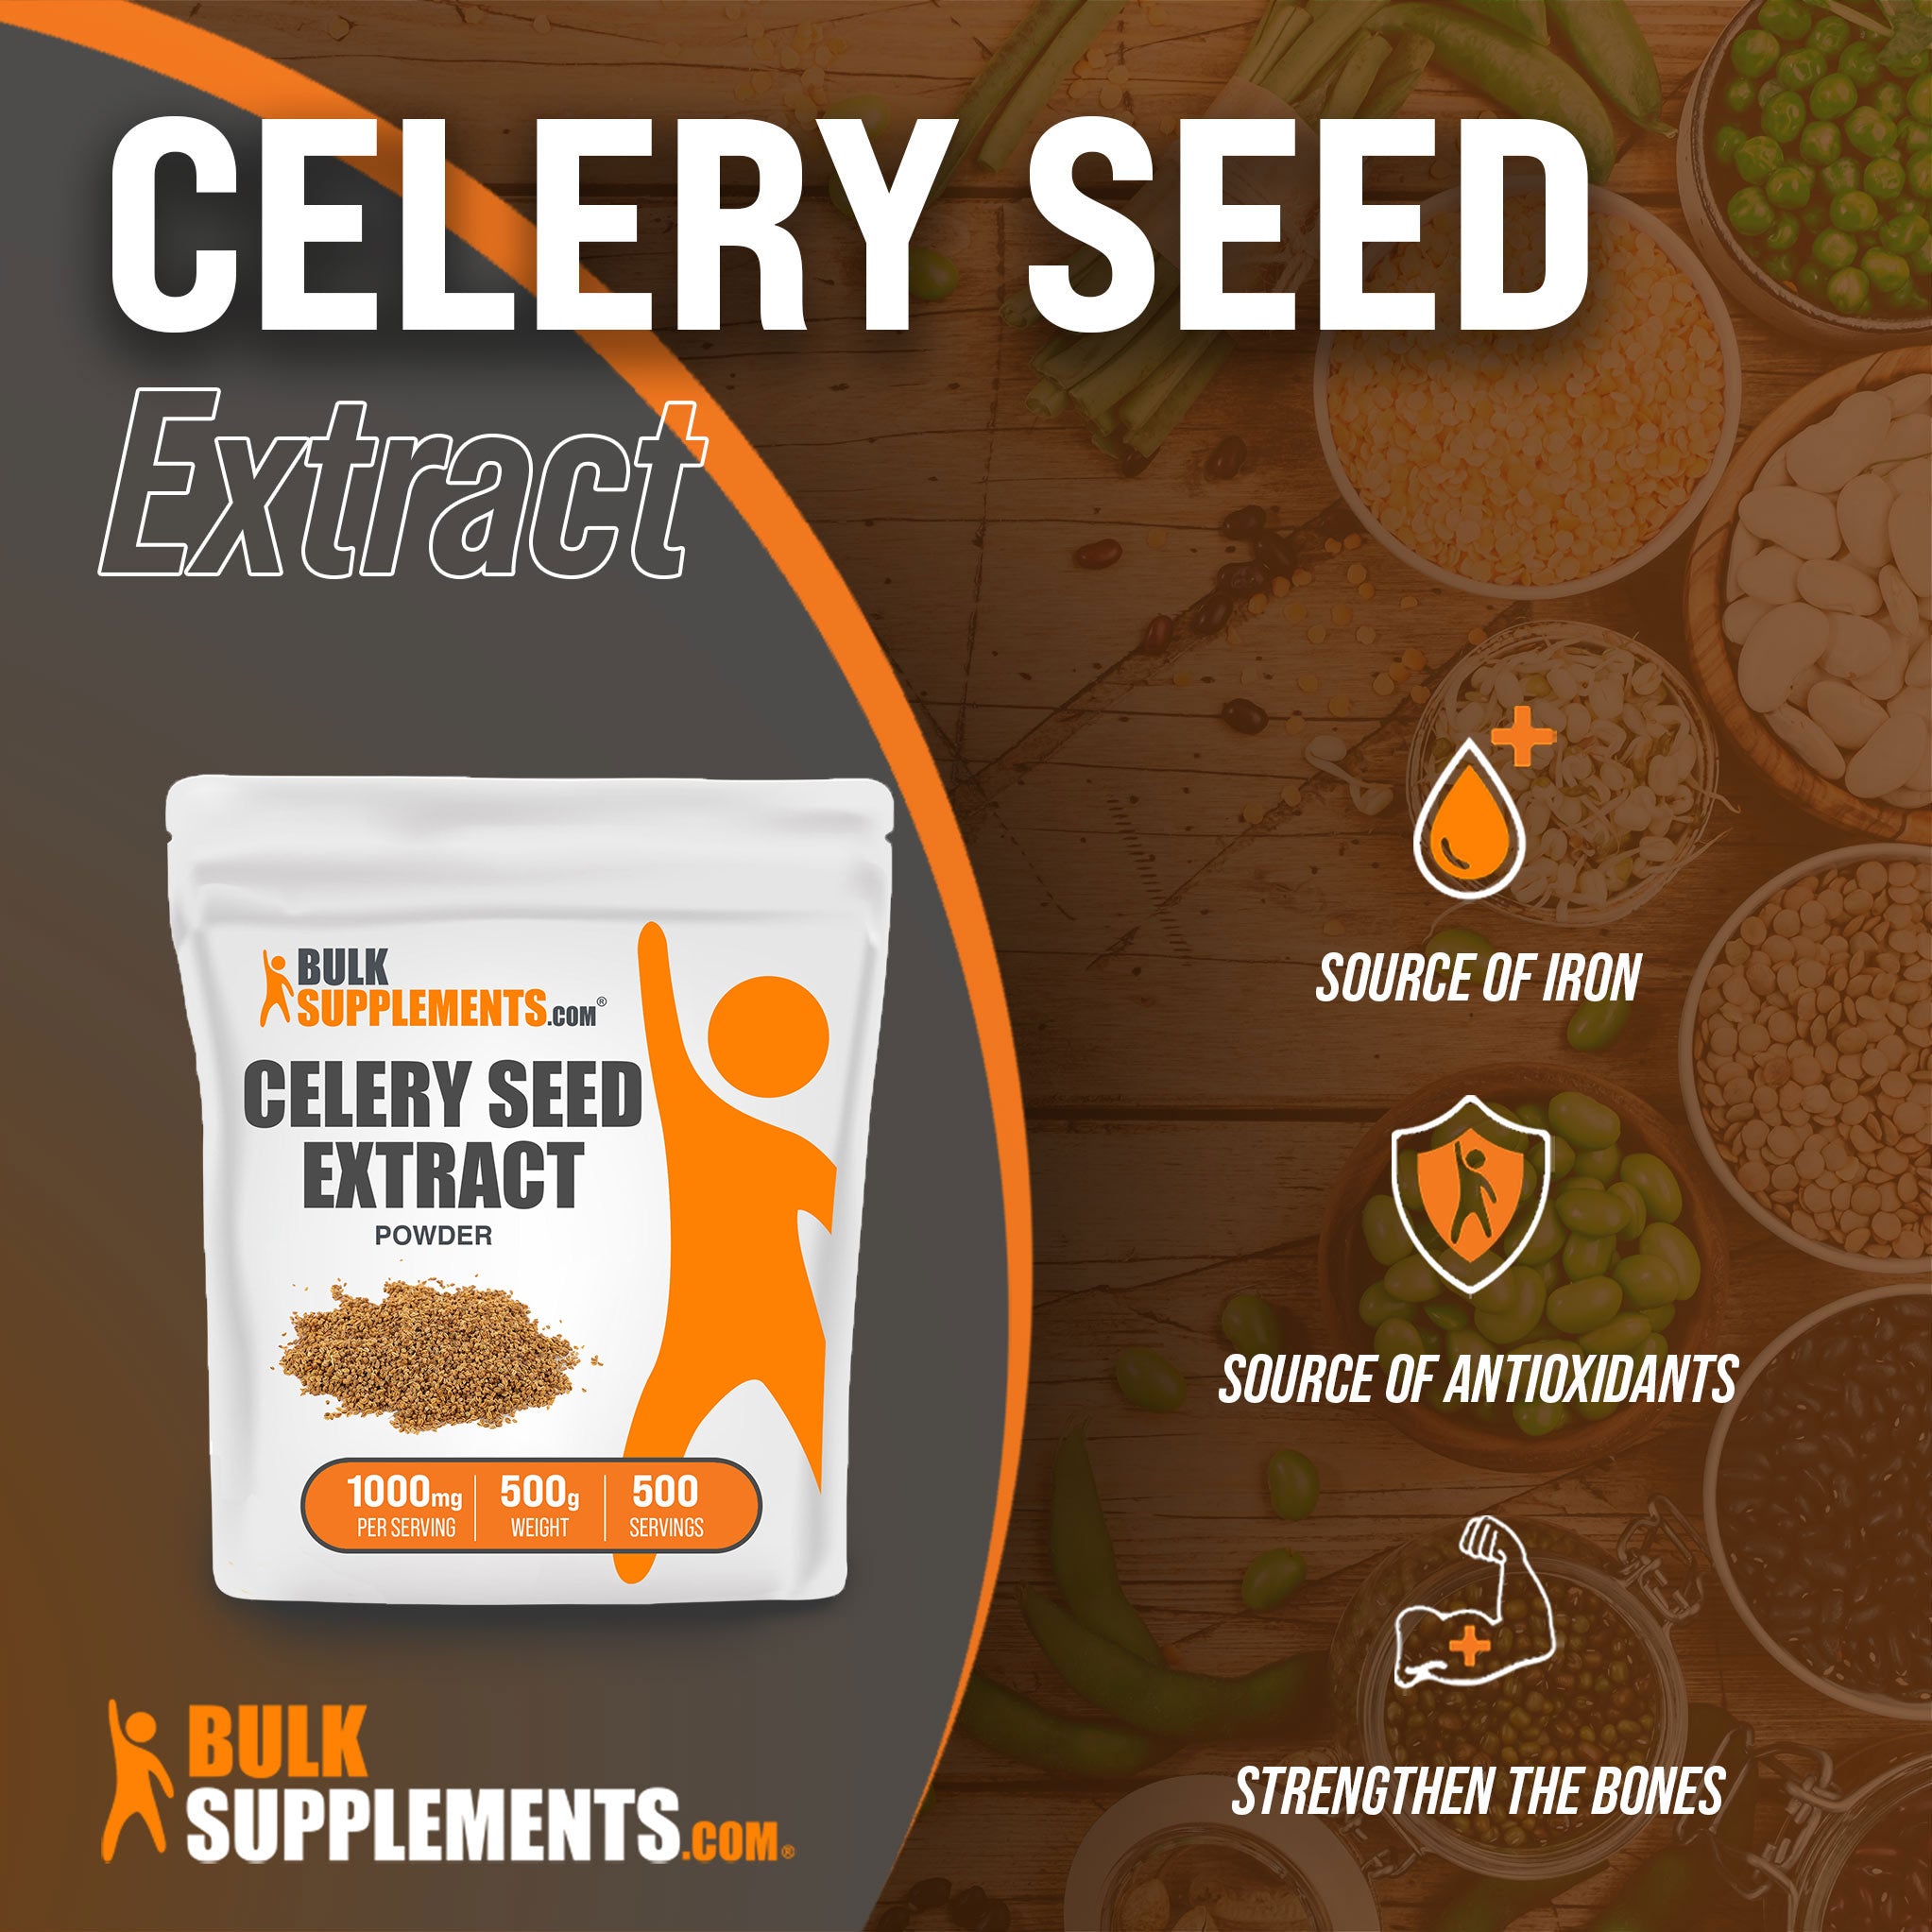 Benefits of Celery Seed Extract; source of iron, source of antioxidants, strengthen the bones